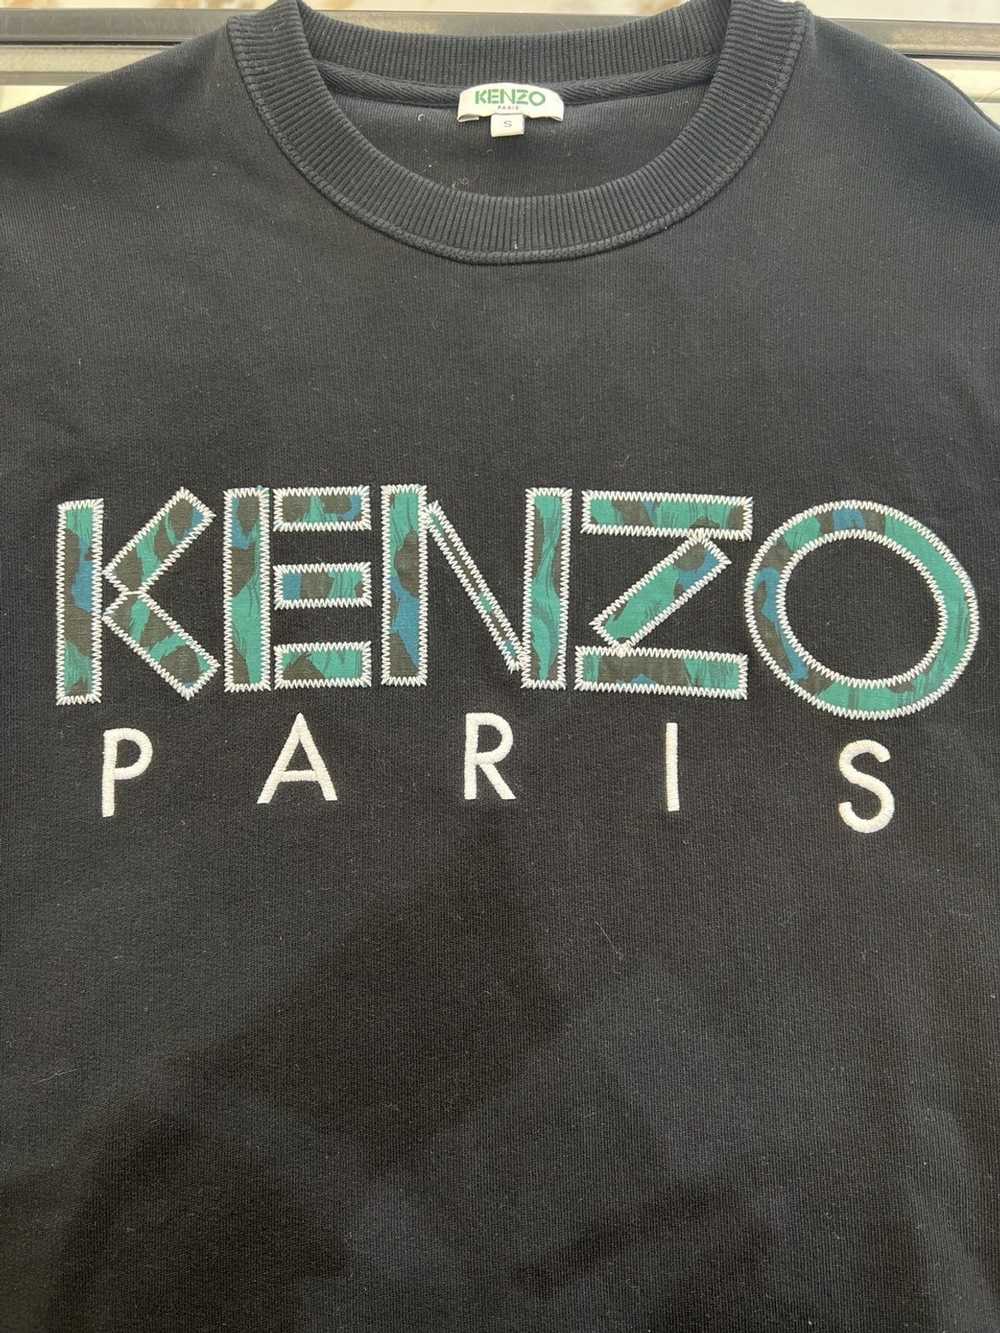 Kenzo Mens Used Kenzo Paris Sweatshirt - image 4